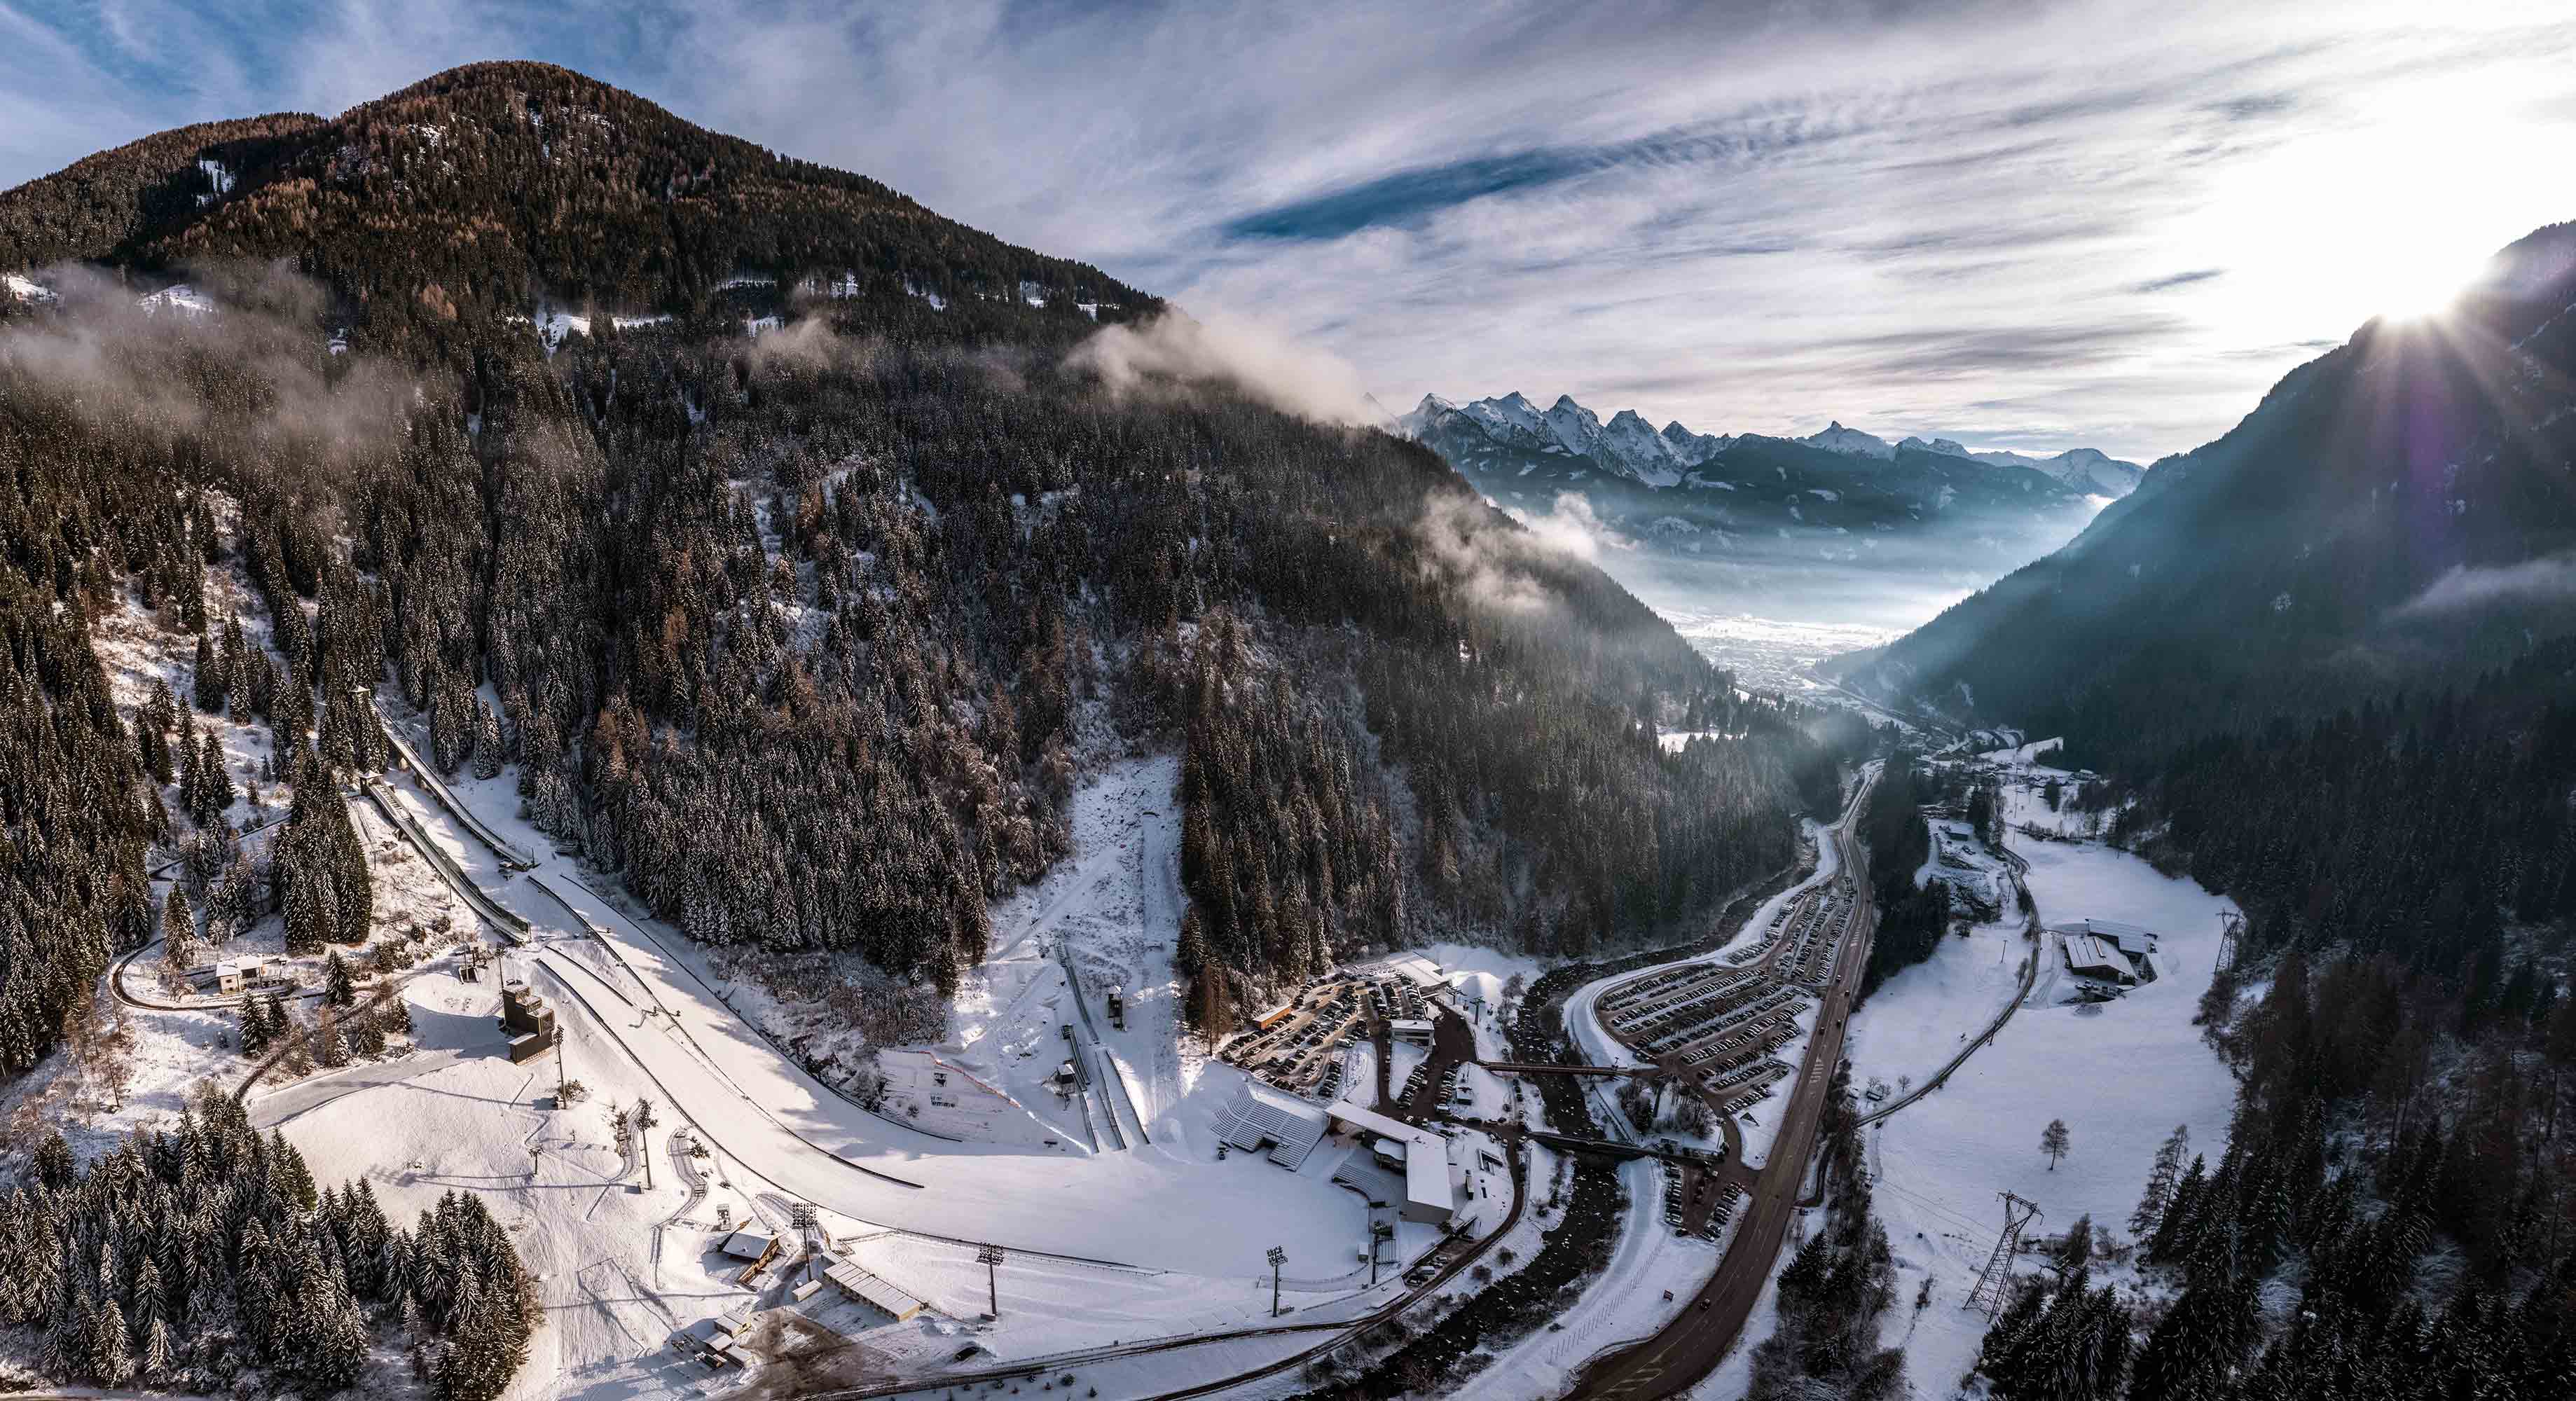 Evocative image of Predazzo amidst the peaks of the Dolomites